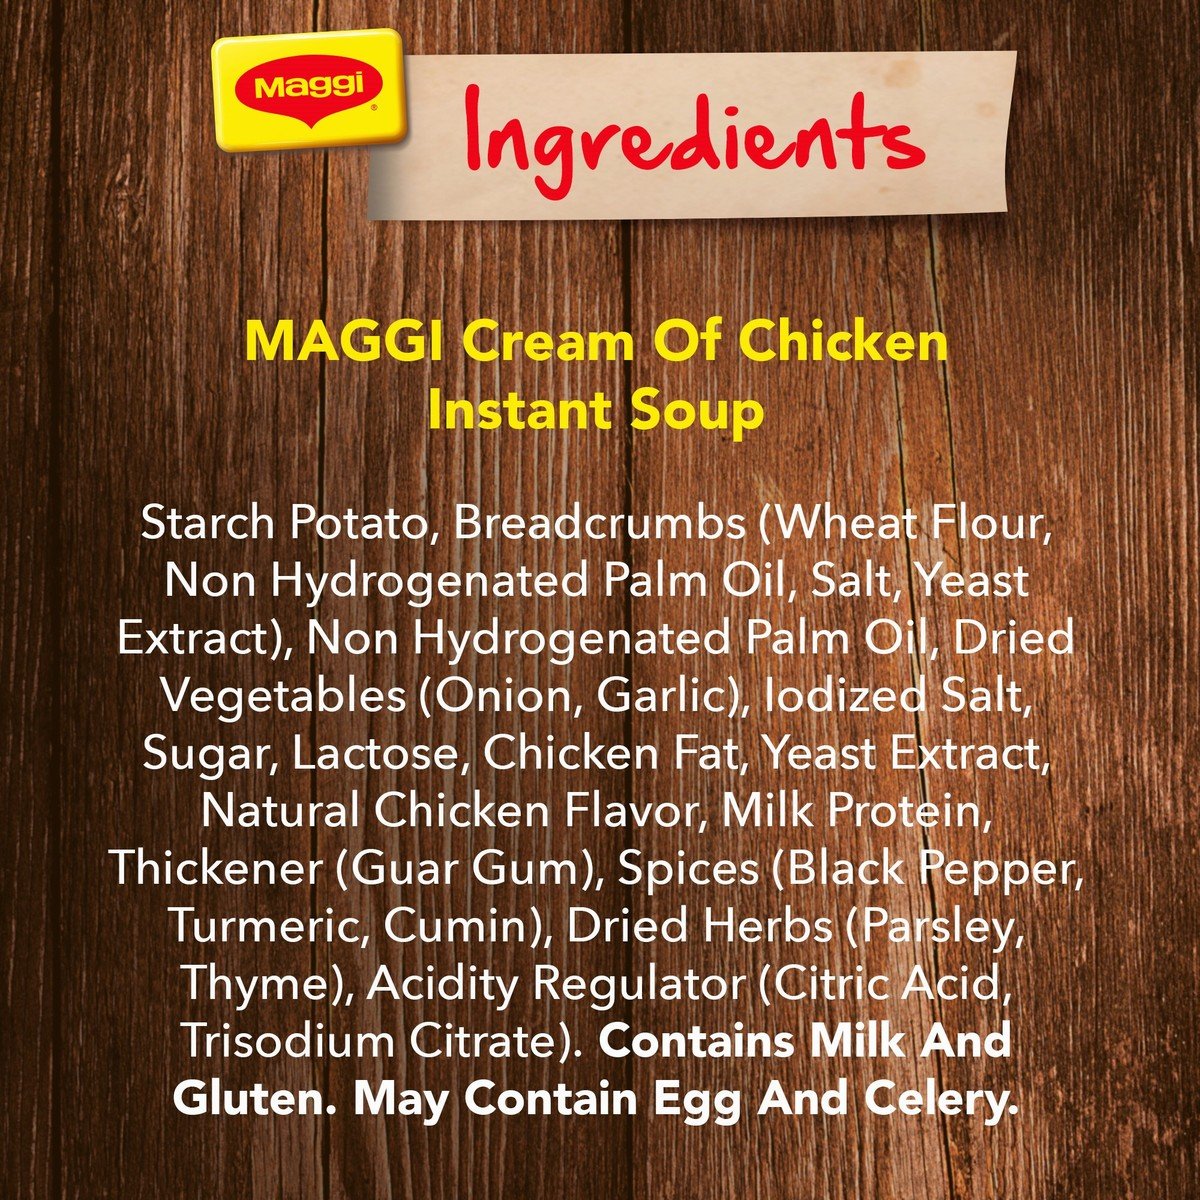 Maggi Cream of Chicken Instant Soup 4 x 16g